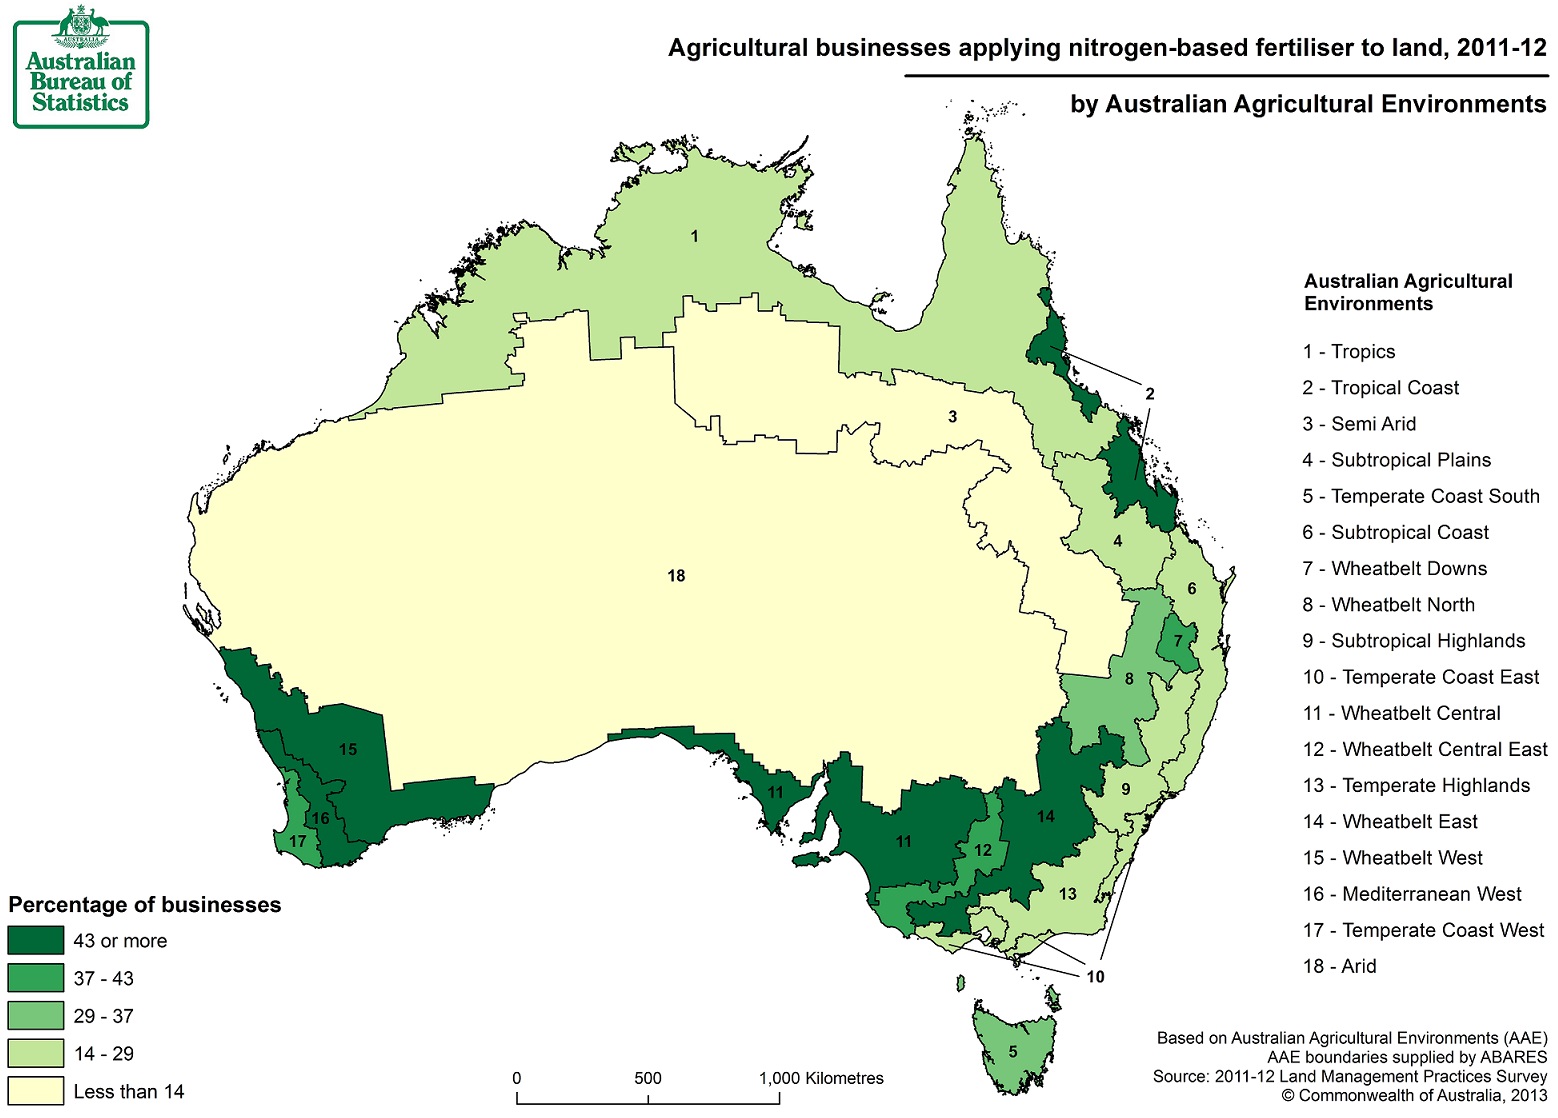 Image: Map of nitrogen-based fertiliser use